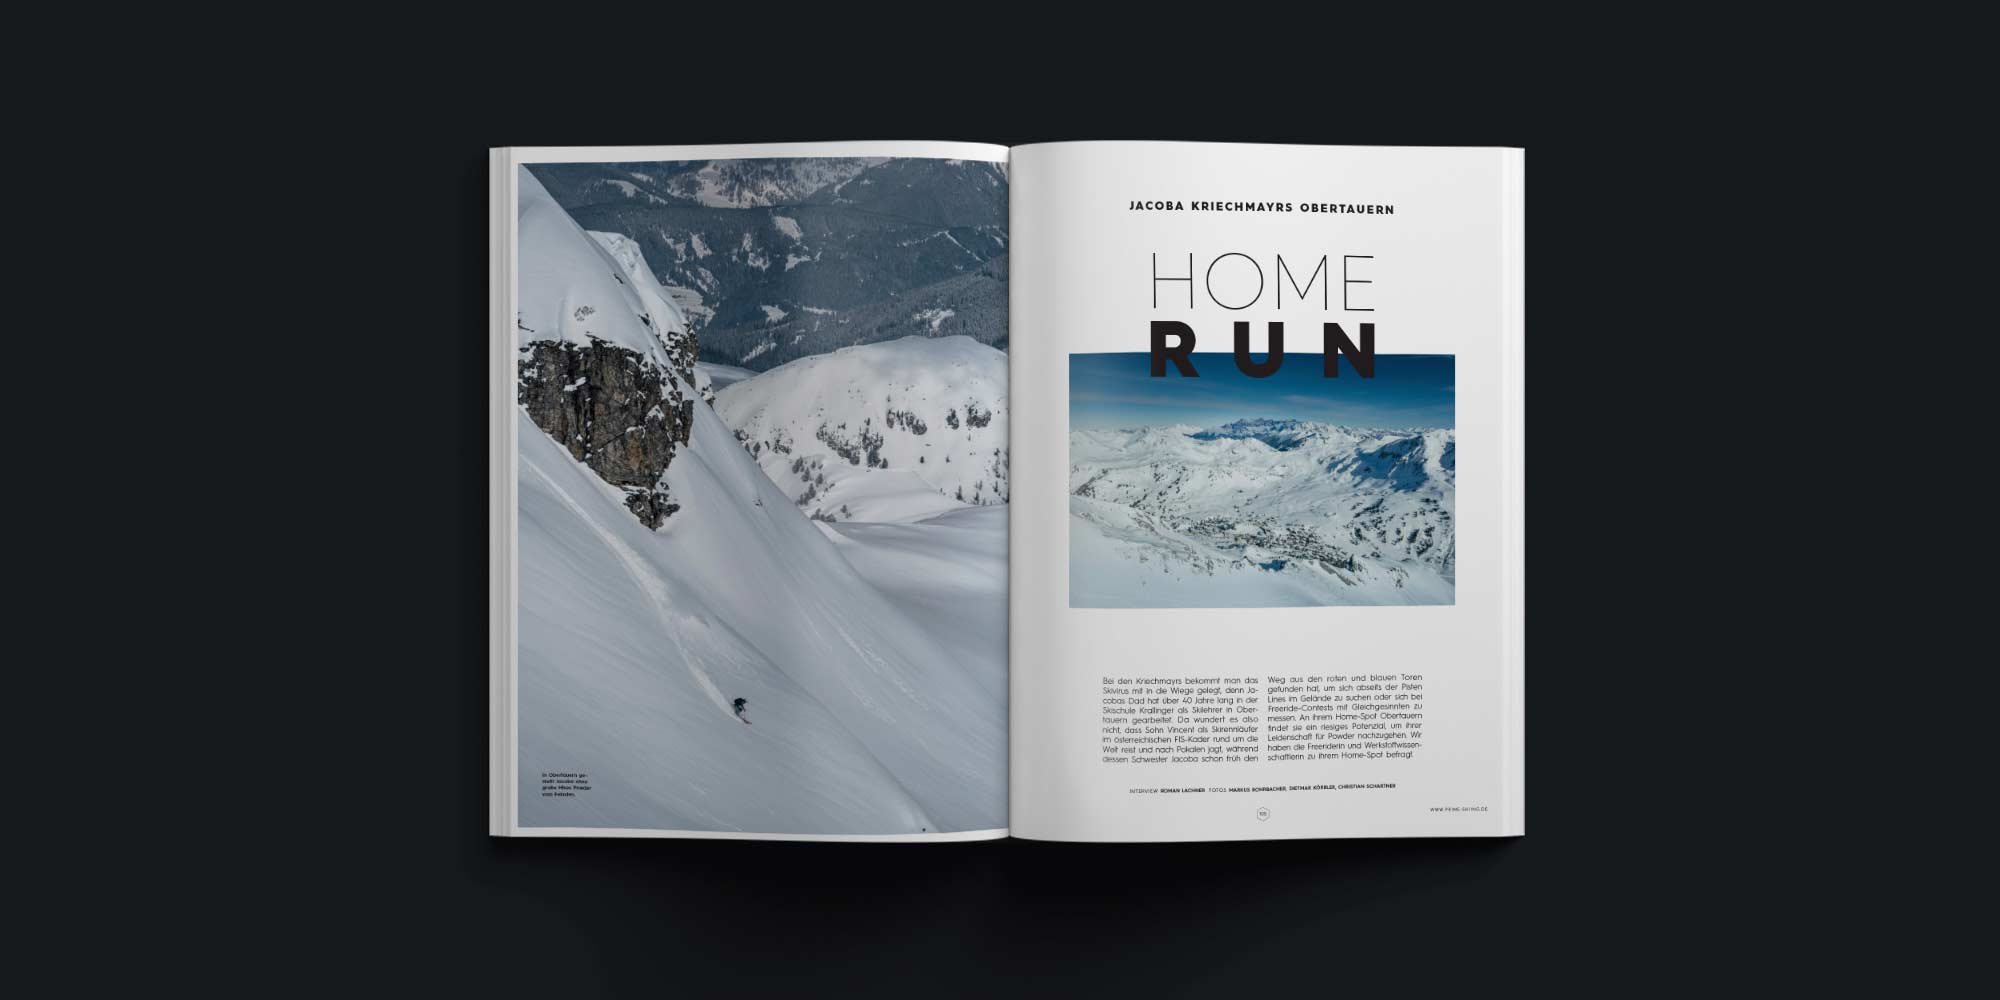 PRIME Skiing #37 – Artikel Highlights: Home Run – Obertauern